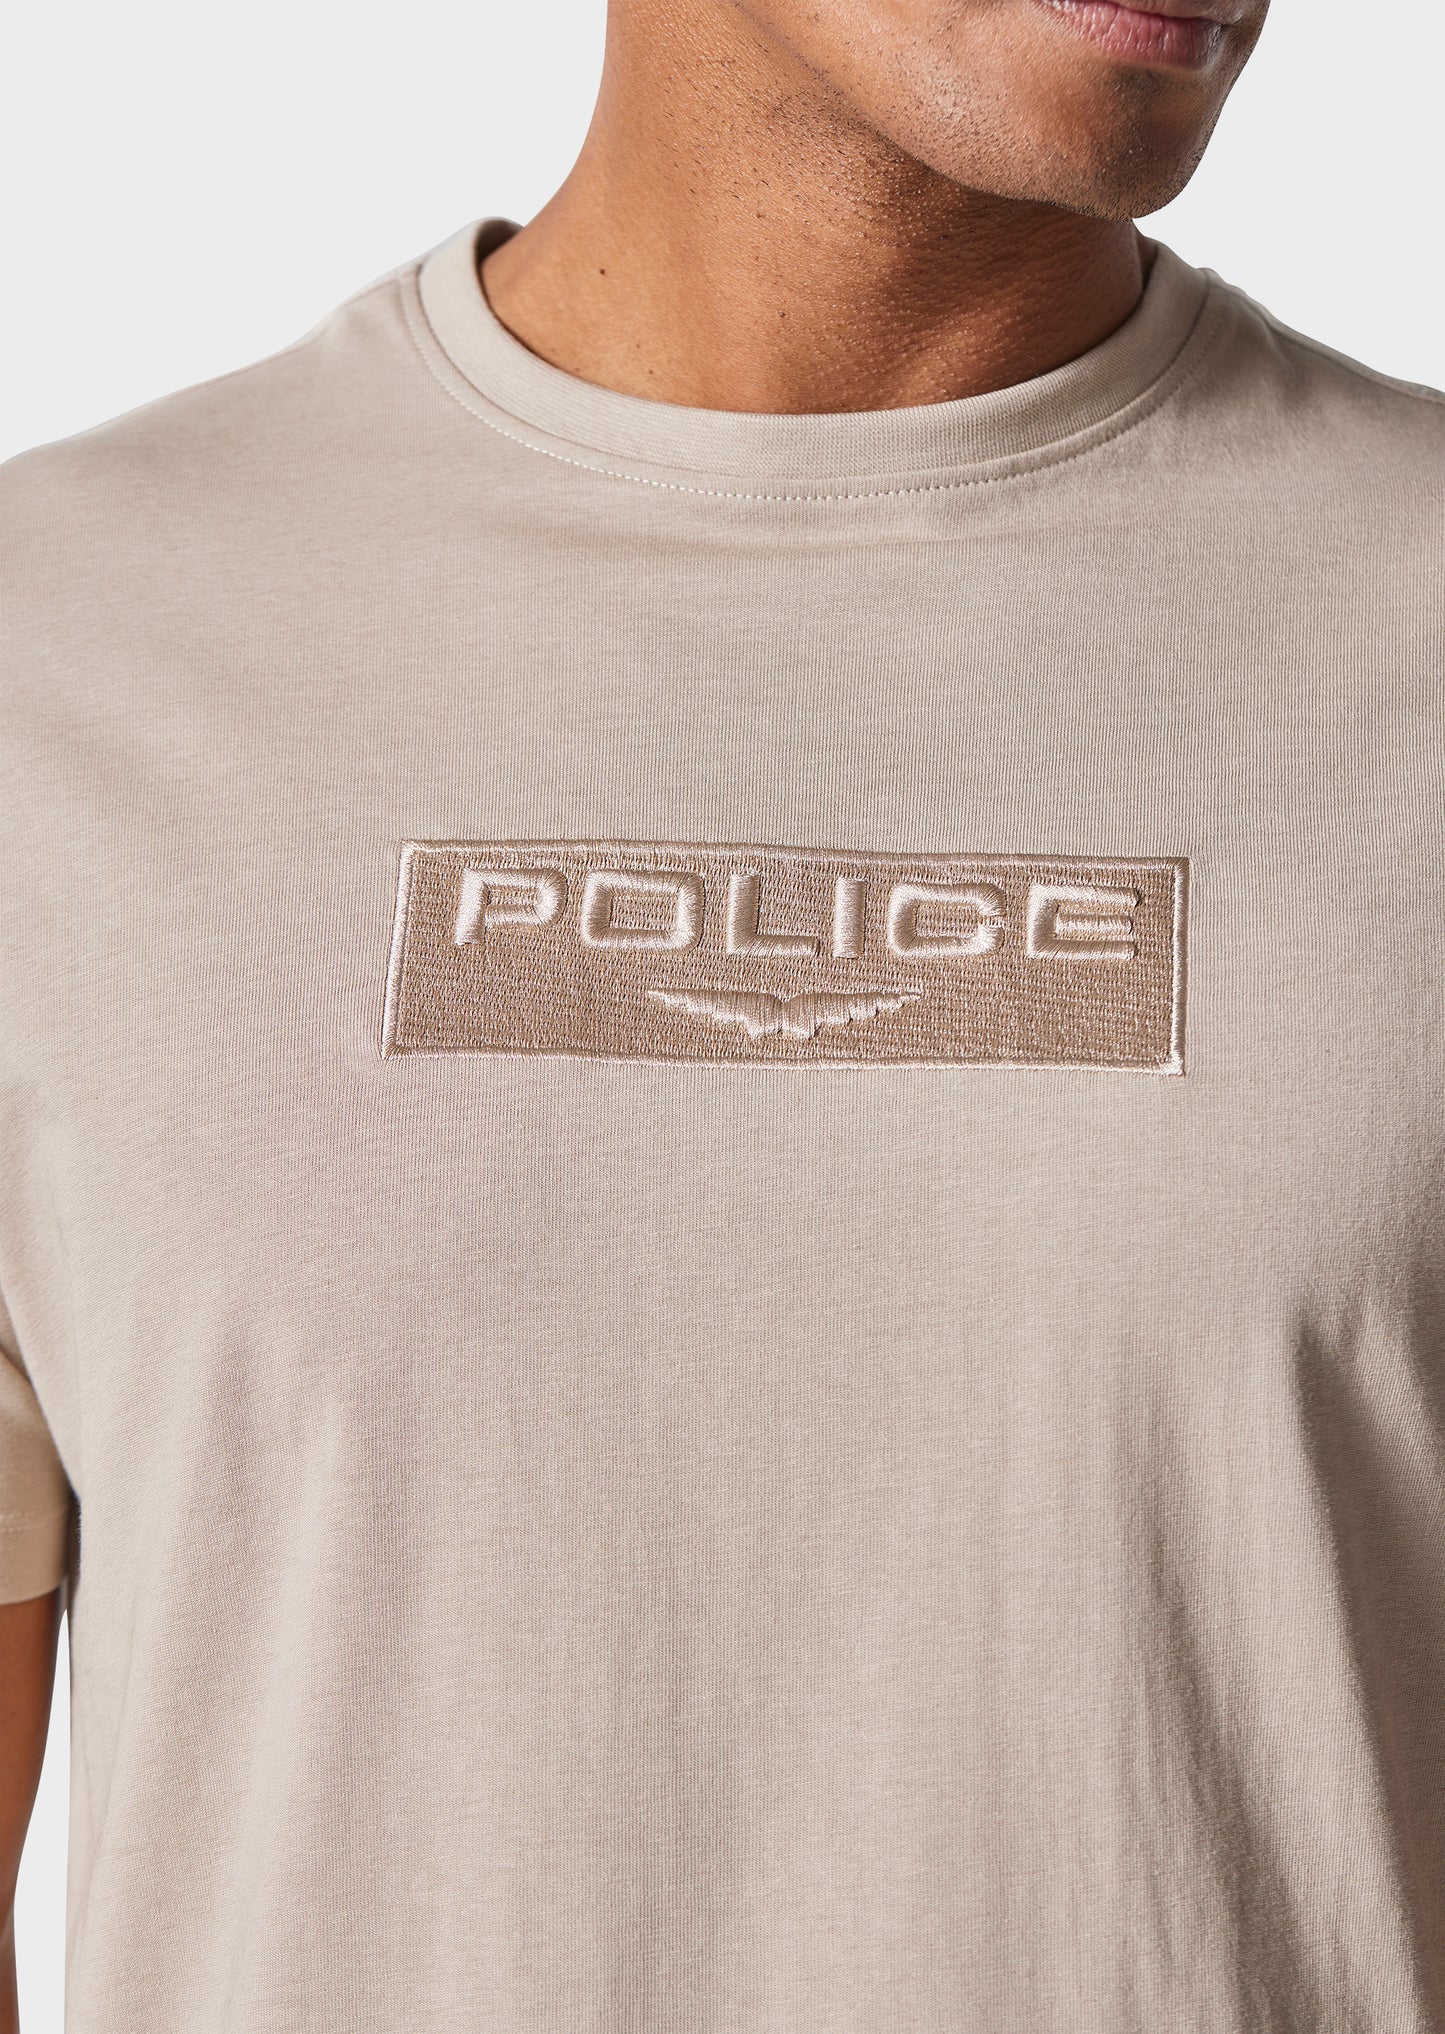 Coasts Neutral Police T-Shirt